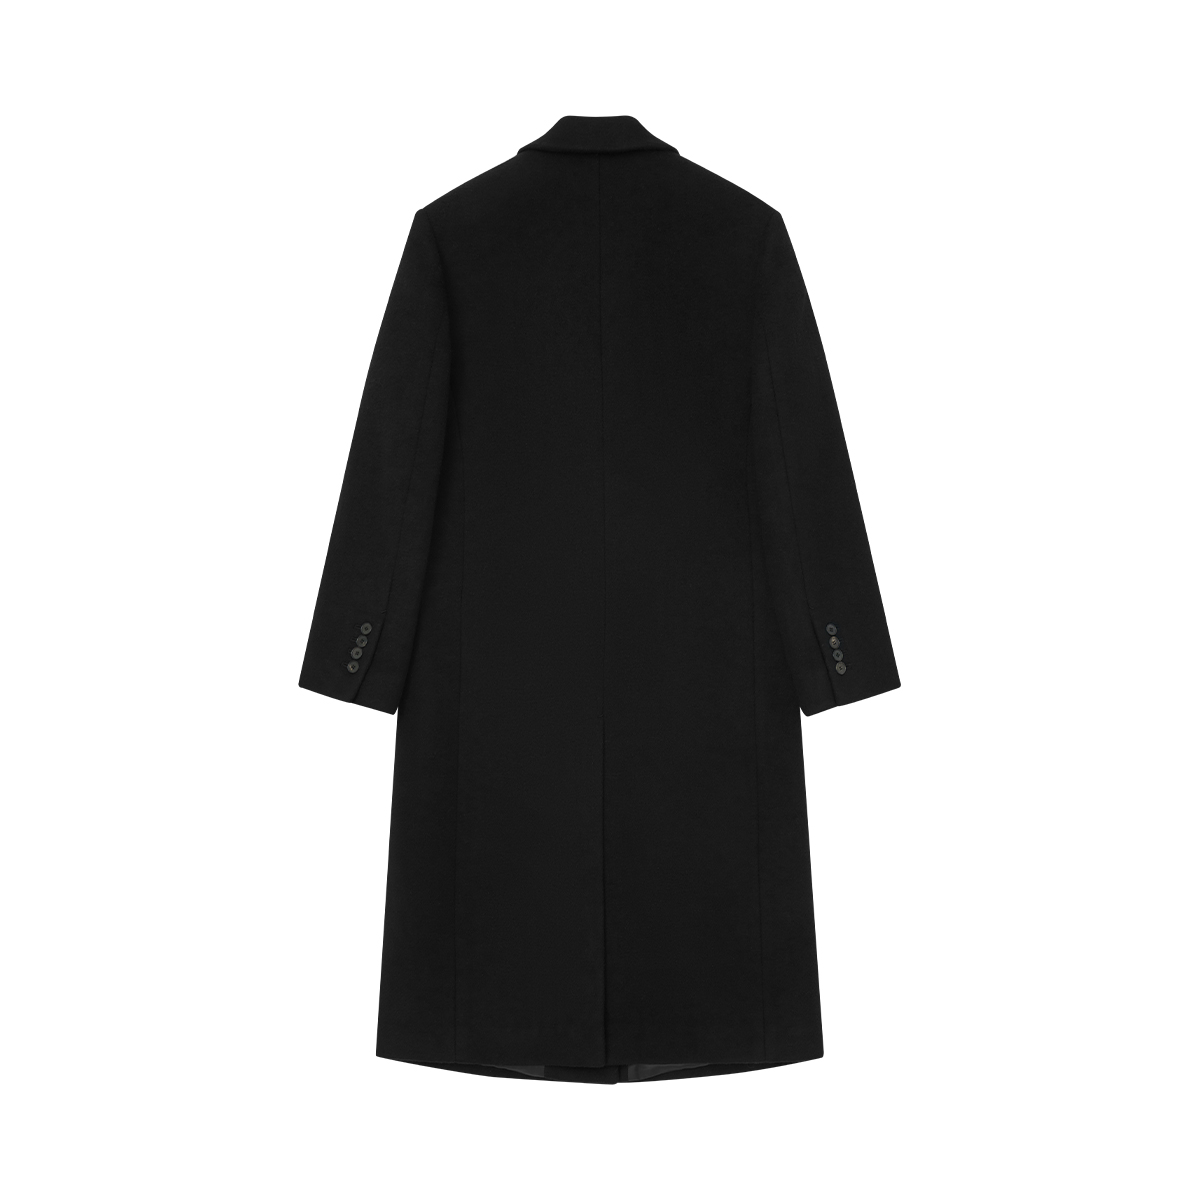 oalc 싱글브레스트 테일러드 코트 Single Breasted Tailored Coat (BLACK)